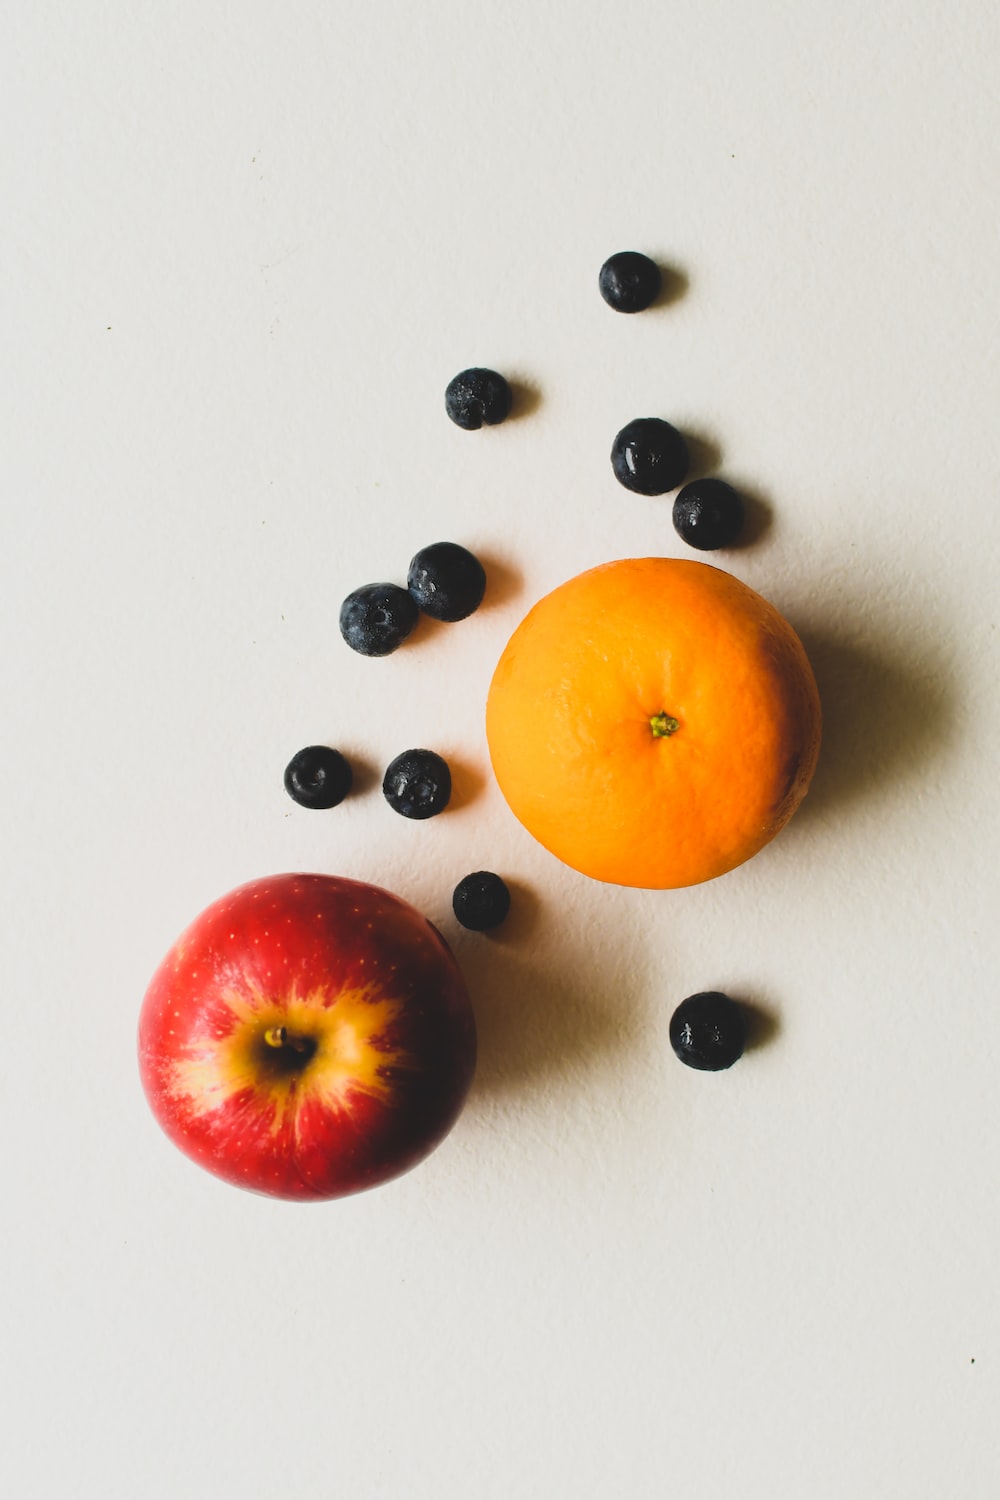 orange fruit beside black and white beads